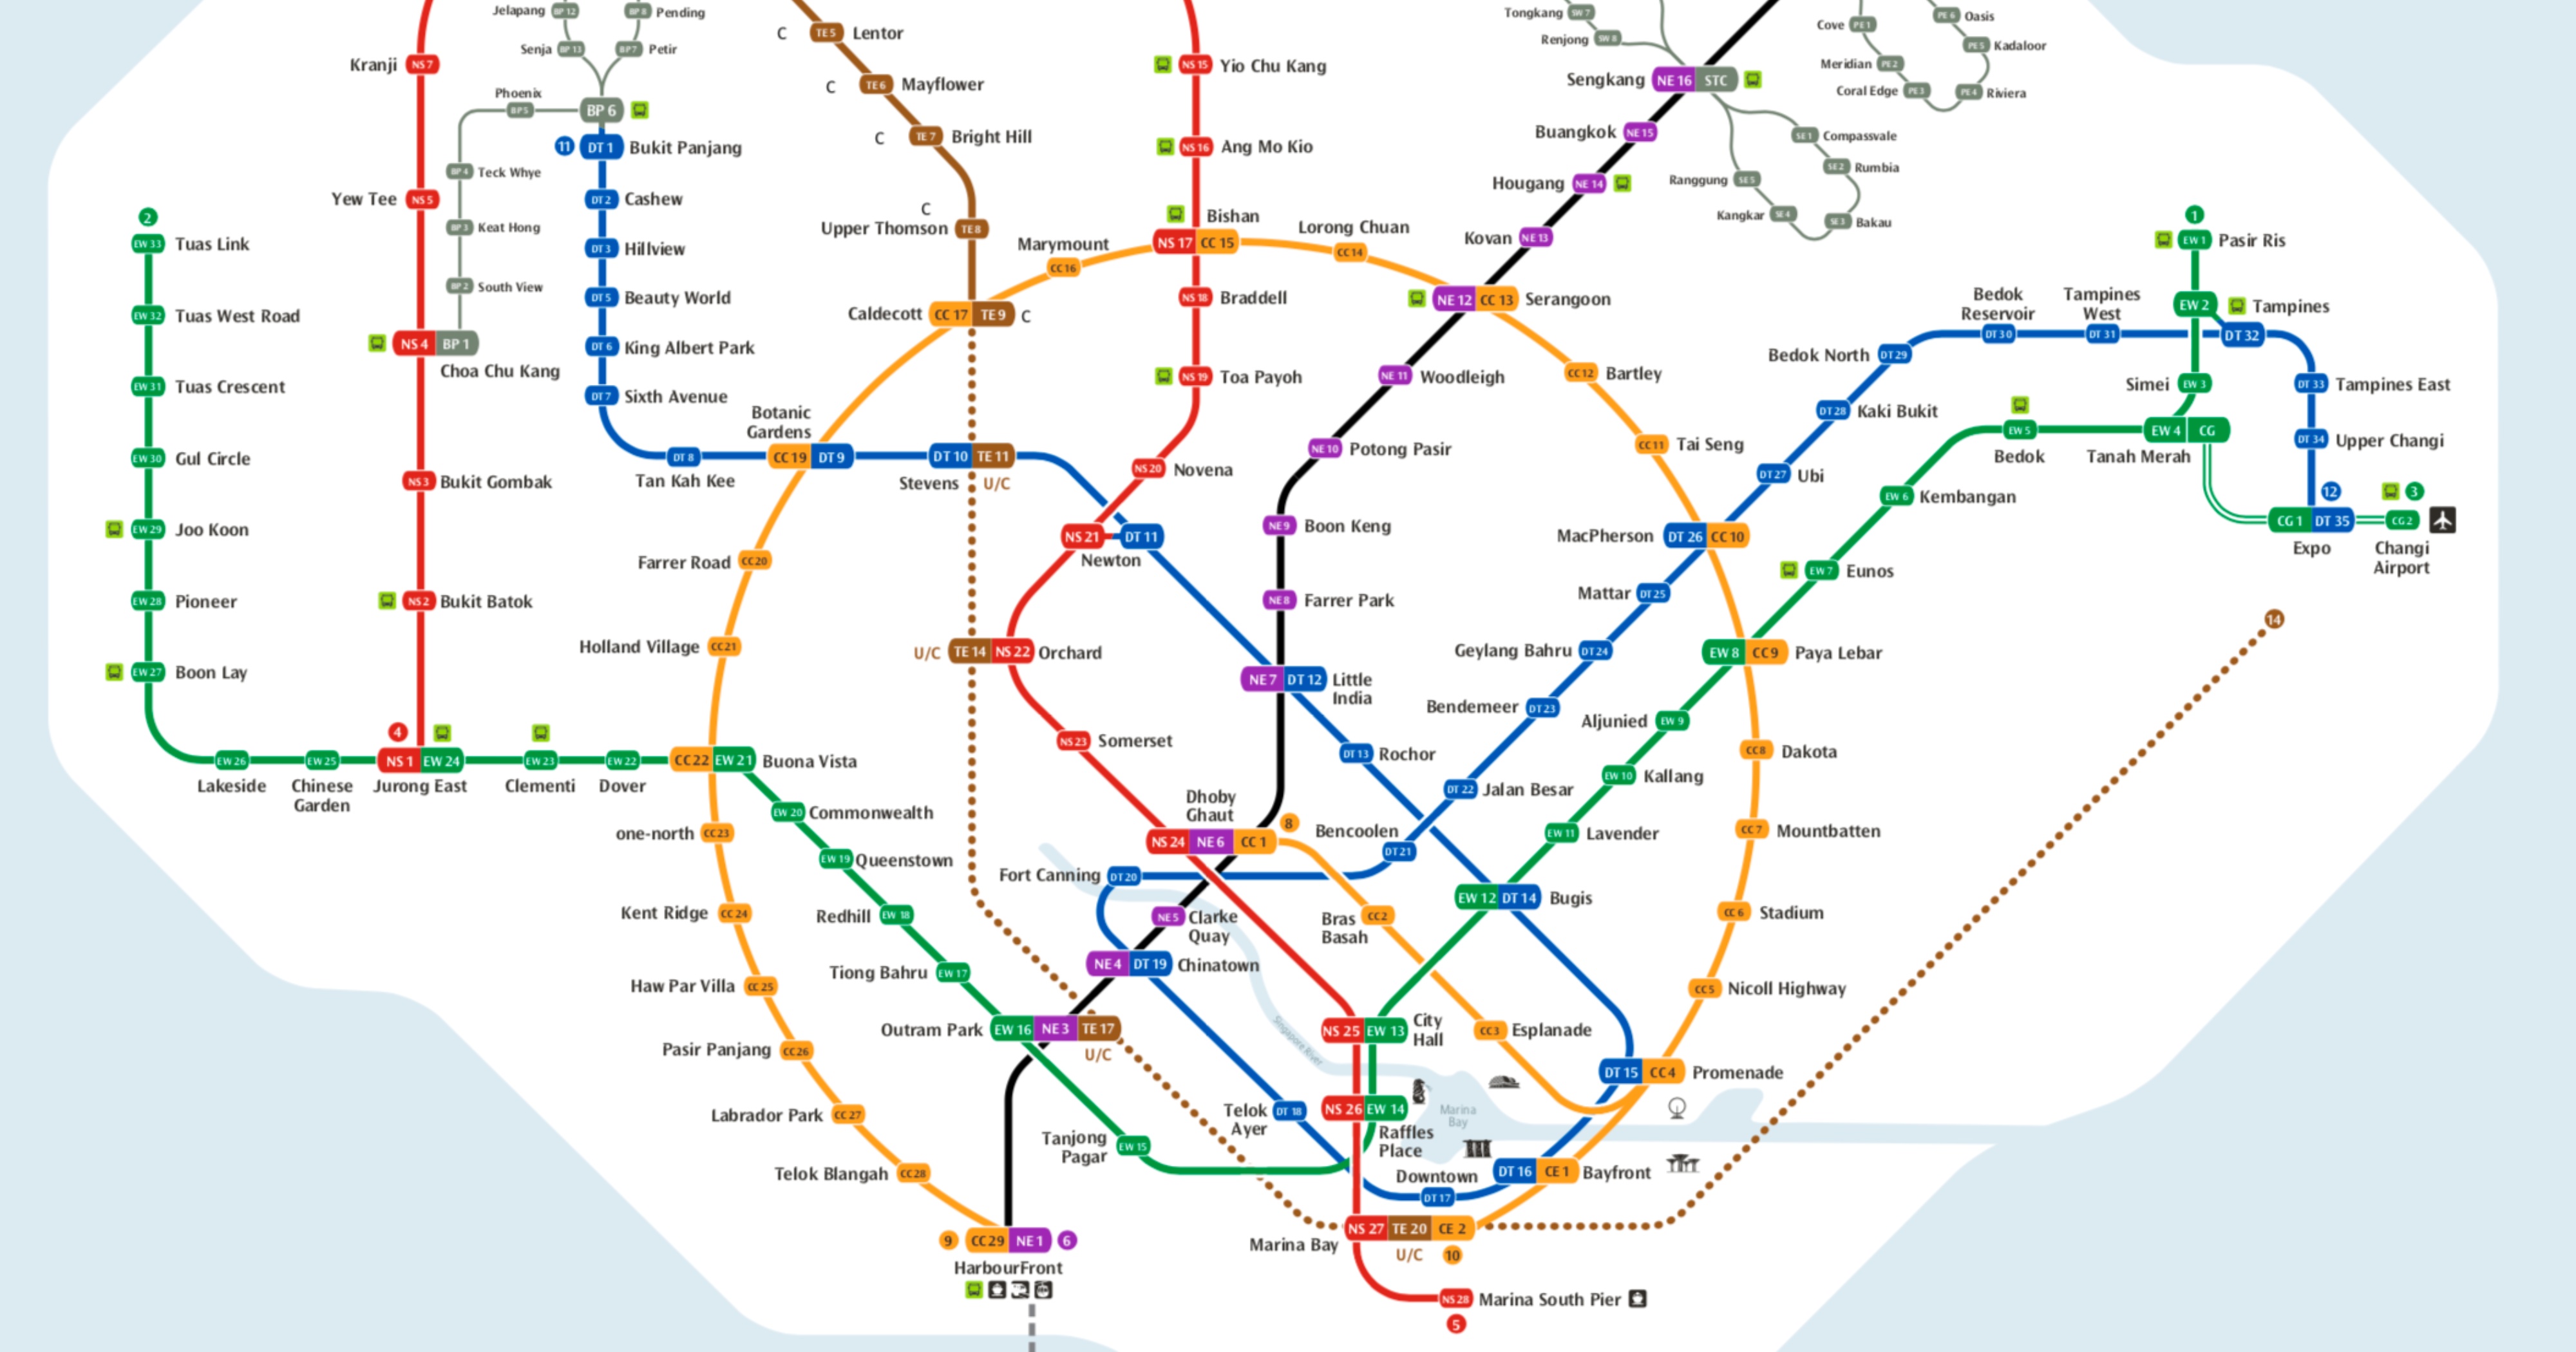 LTA unveils new MRT system map & transit signage system